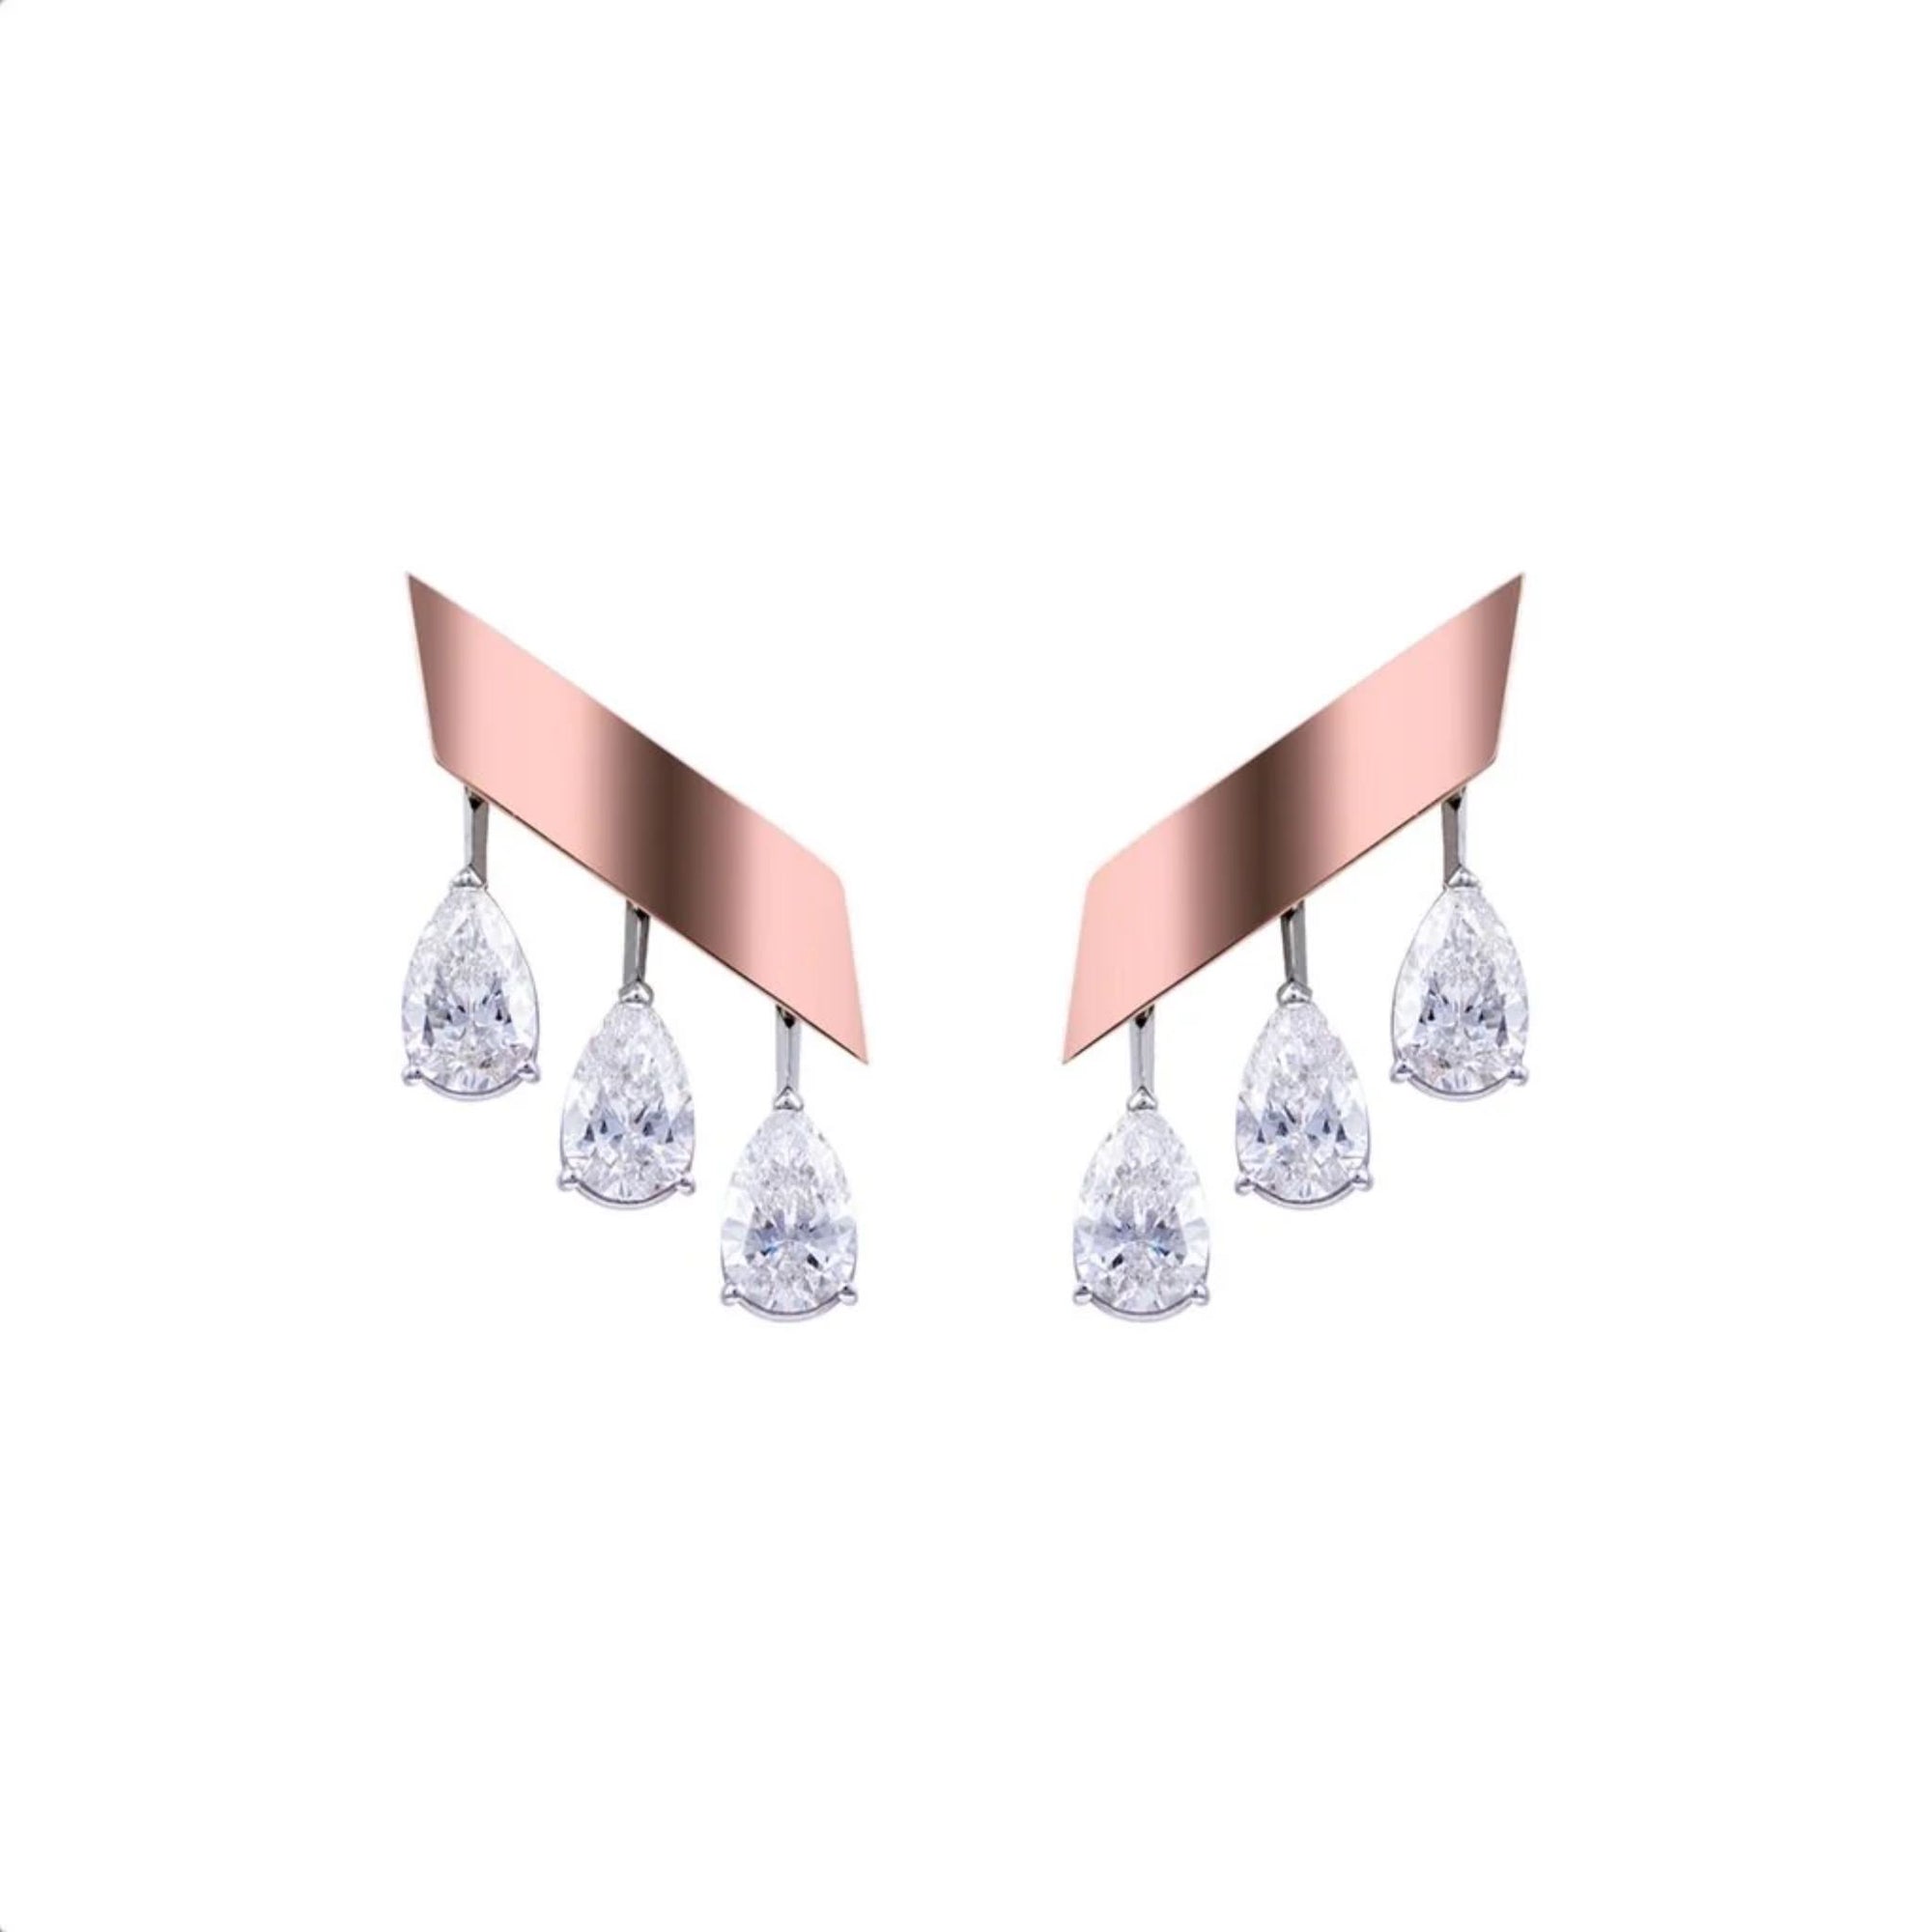 SIMPLICITY DIAMOND EARRINGS ROSE GOLD | Earring | 18K rose gold, diamonds, earring | ORLOV